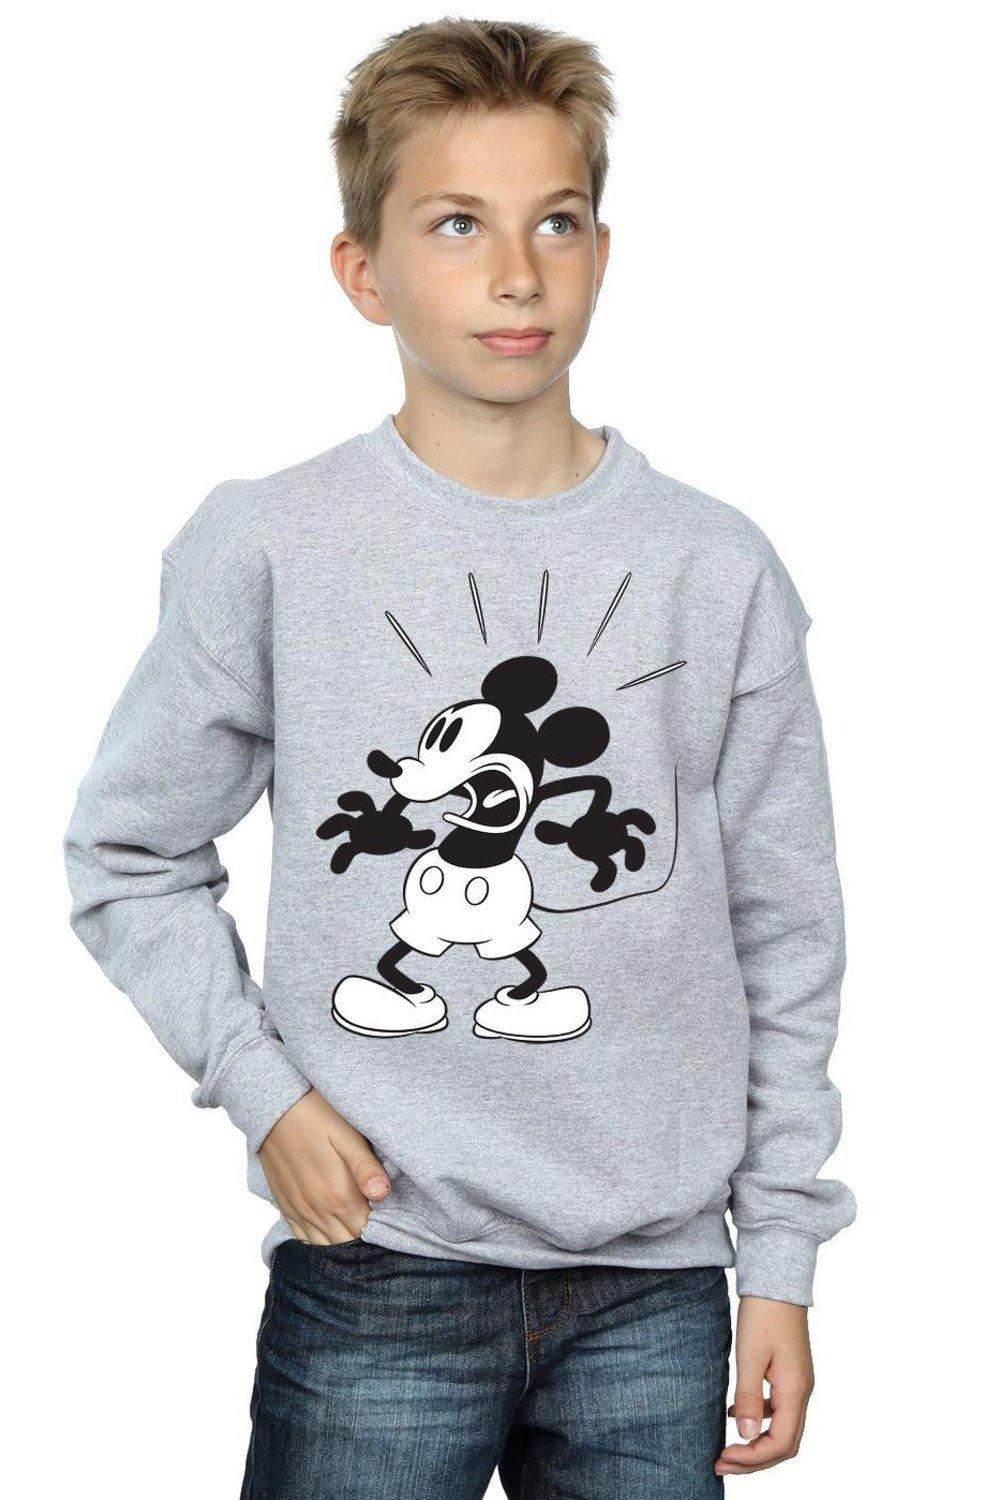 Mickey Mouse Scared Sweatshirt